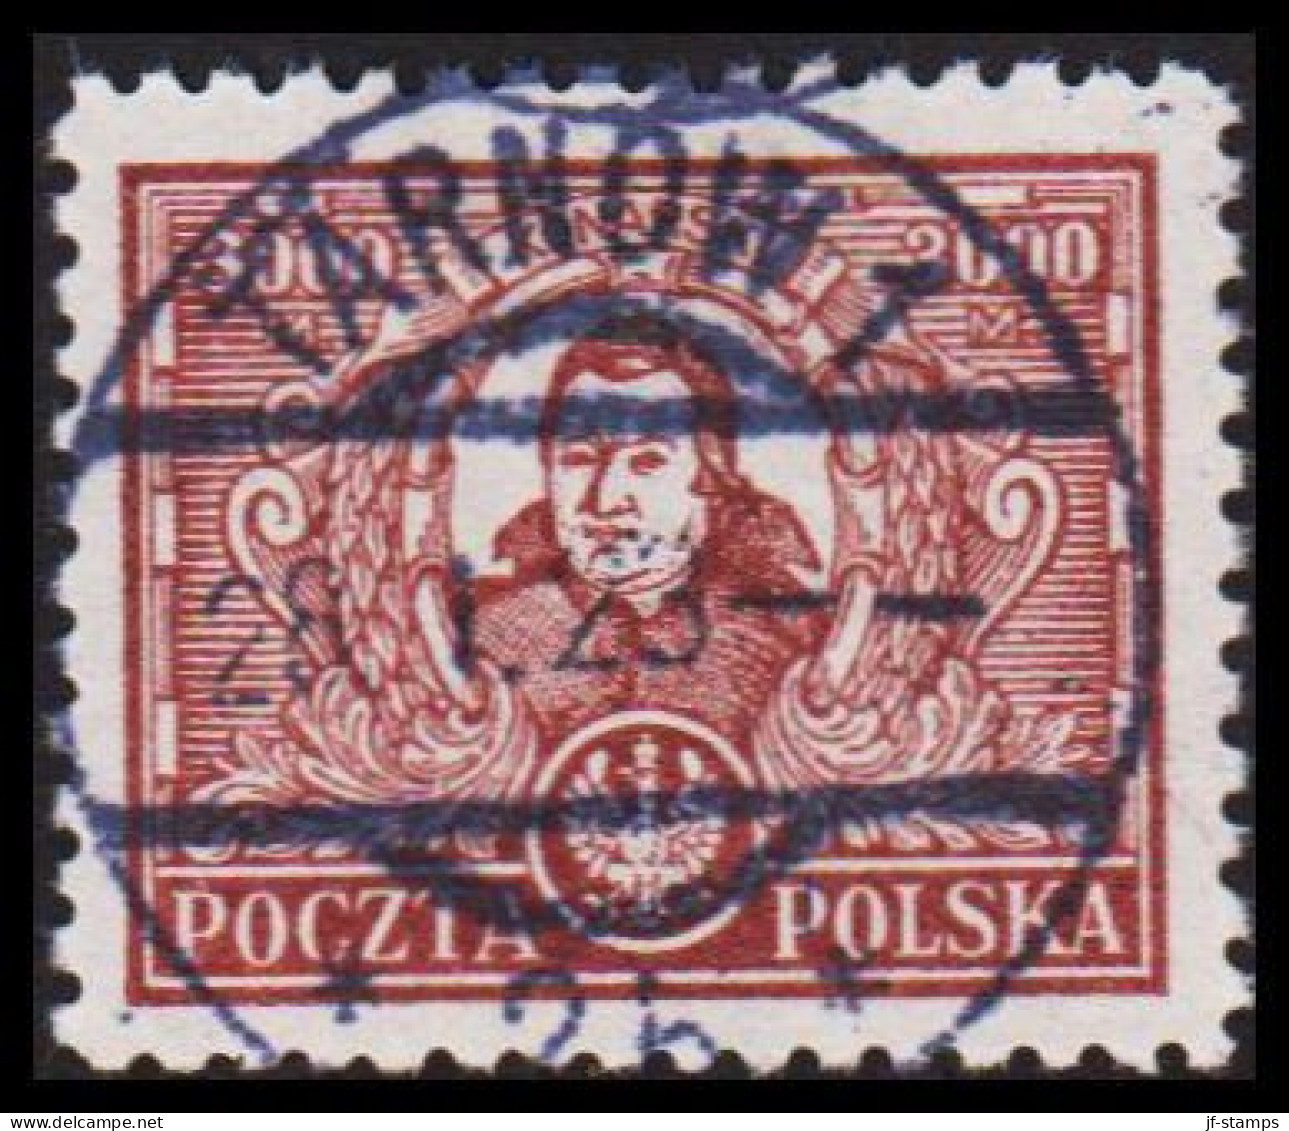 1923. POLSKA.  KONARSKI 3000 M. Luxus Cancel TARNOW 28 1 23.  (Michel 183) - JF545900 - Oblitérés